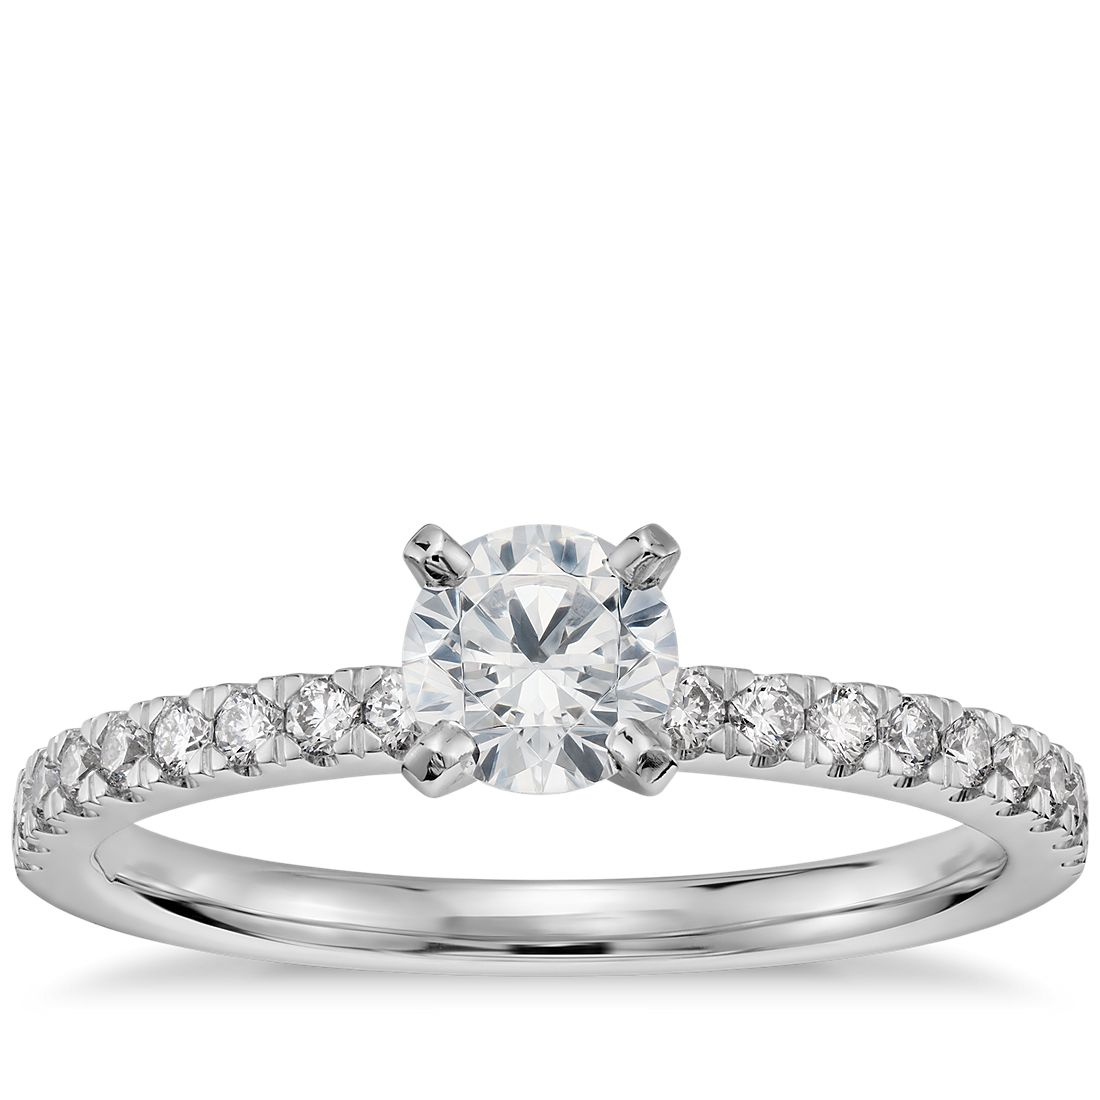 1/2 Carat Ready-to-Ship Petite Pavé Diamond Engagement Ring in 14k White Gold